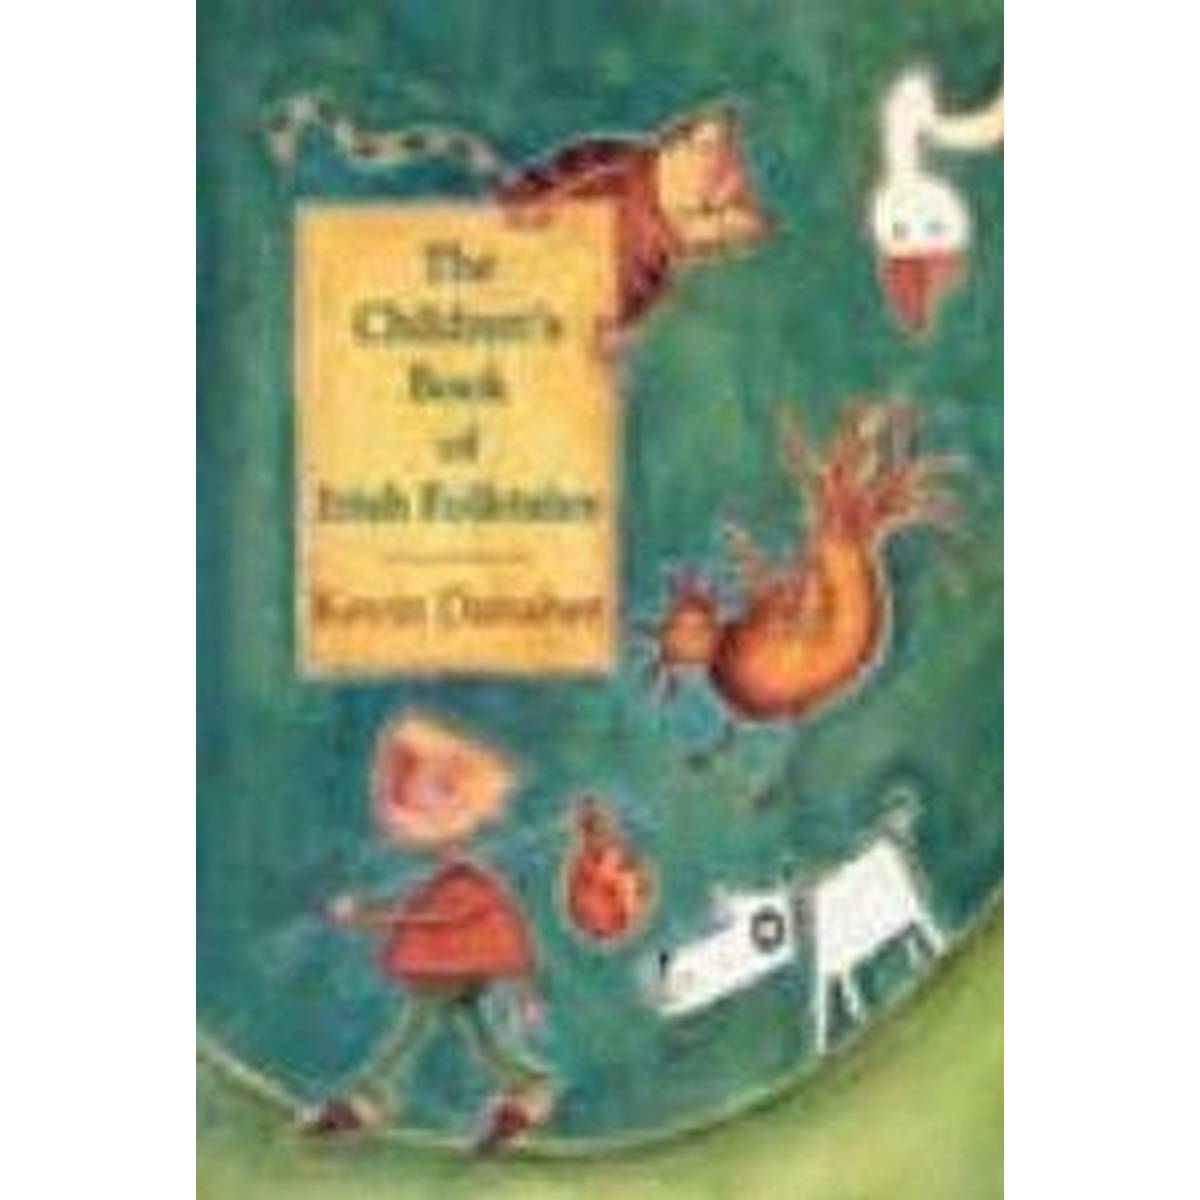 The Children's Book of Irish Folk Tales